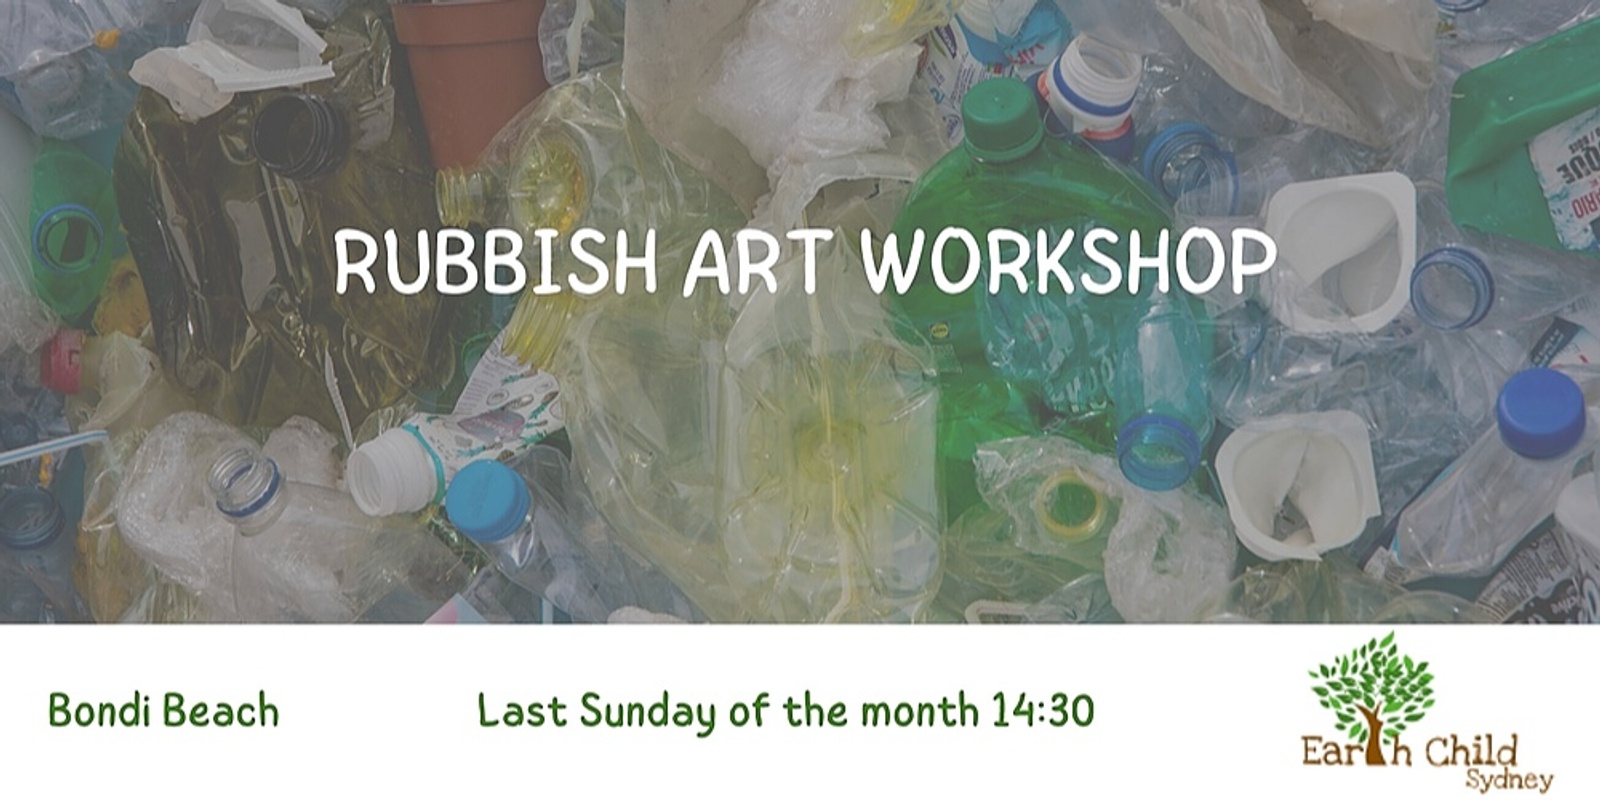 Rubbish Art Workshop: Easter Edition tinfoil sculptures